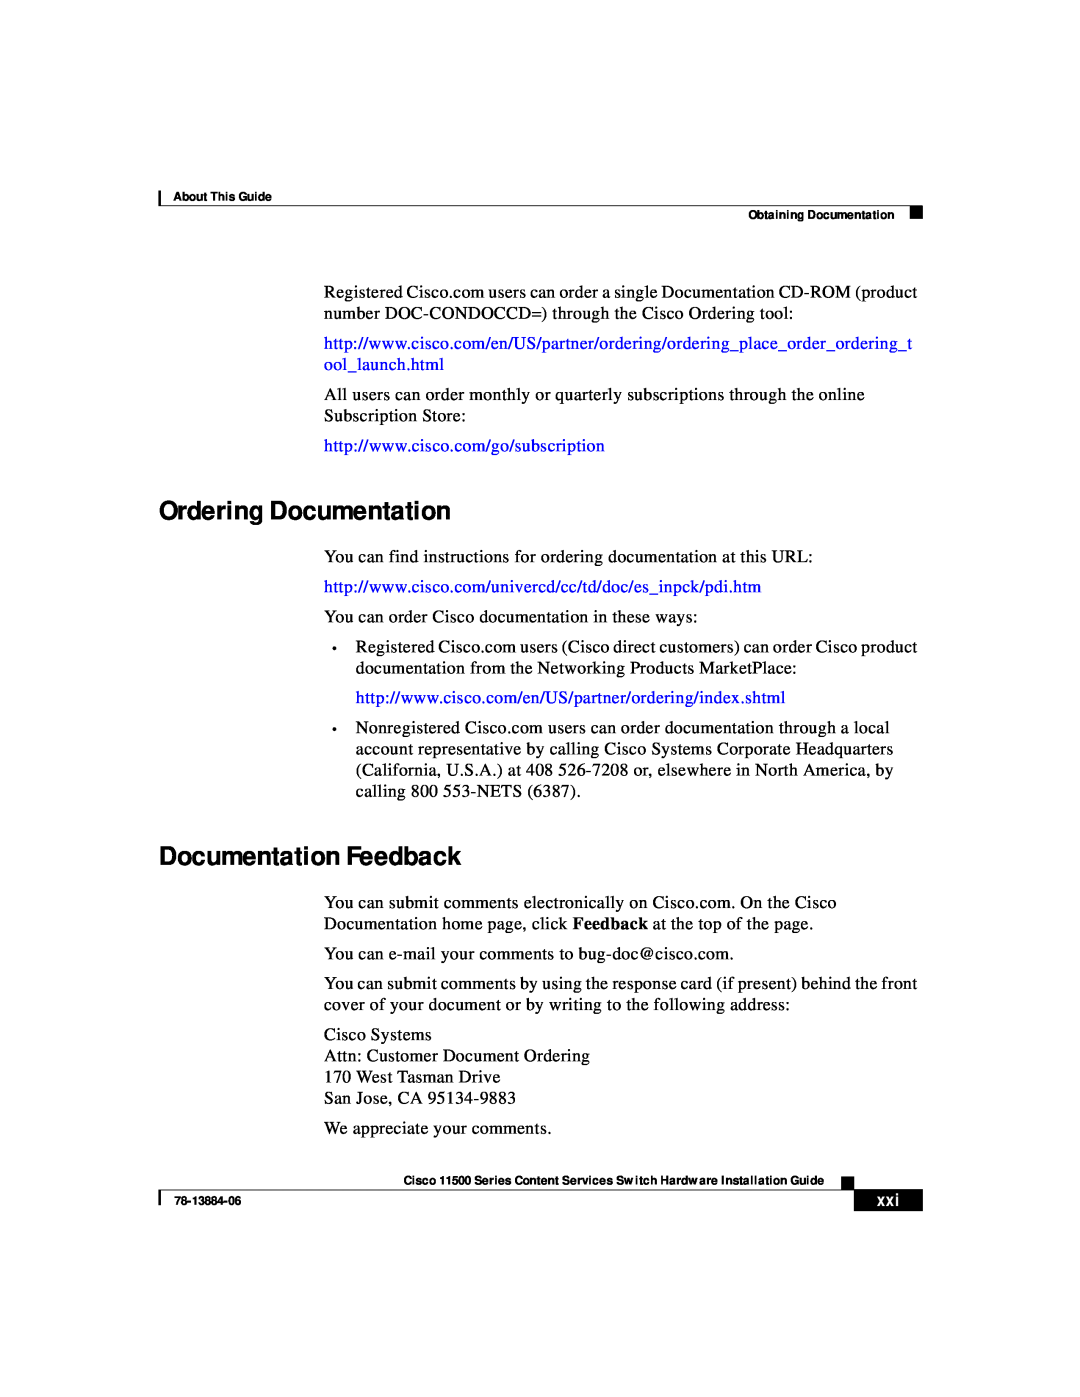 Cisco Systems 11500 Series manual Ordering Documentation, Documentation Feedback 